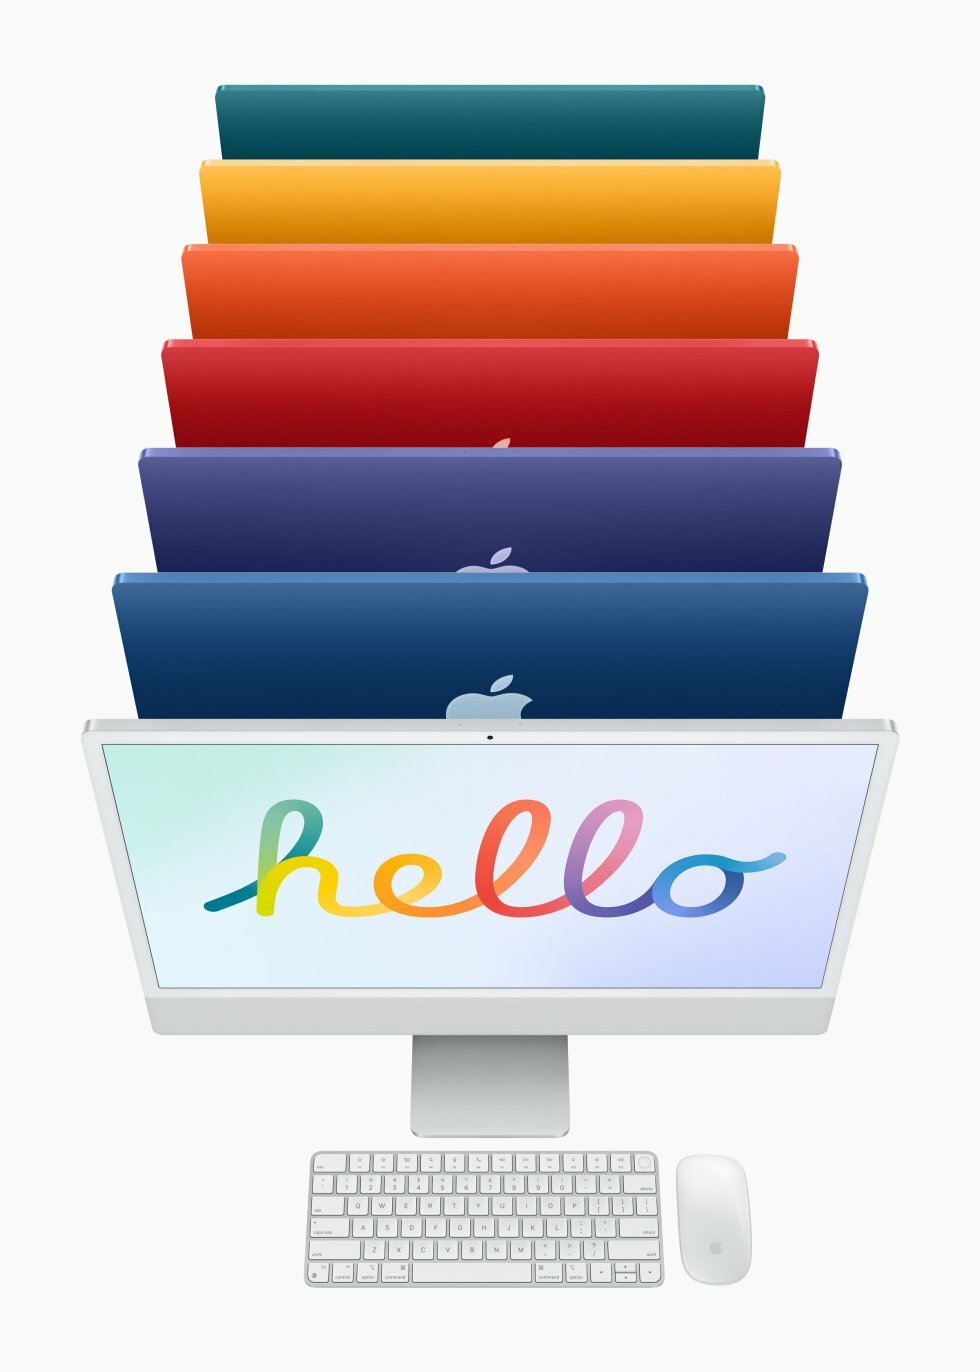 iMac M1 - Foto: Apple - Apples nye iMac M1 leverer det tyndeste design til dato